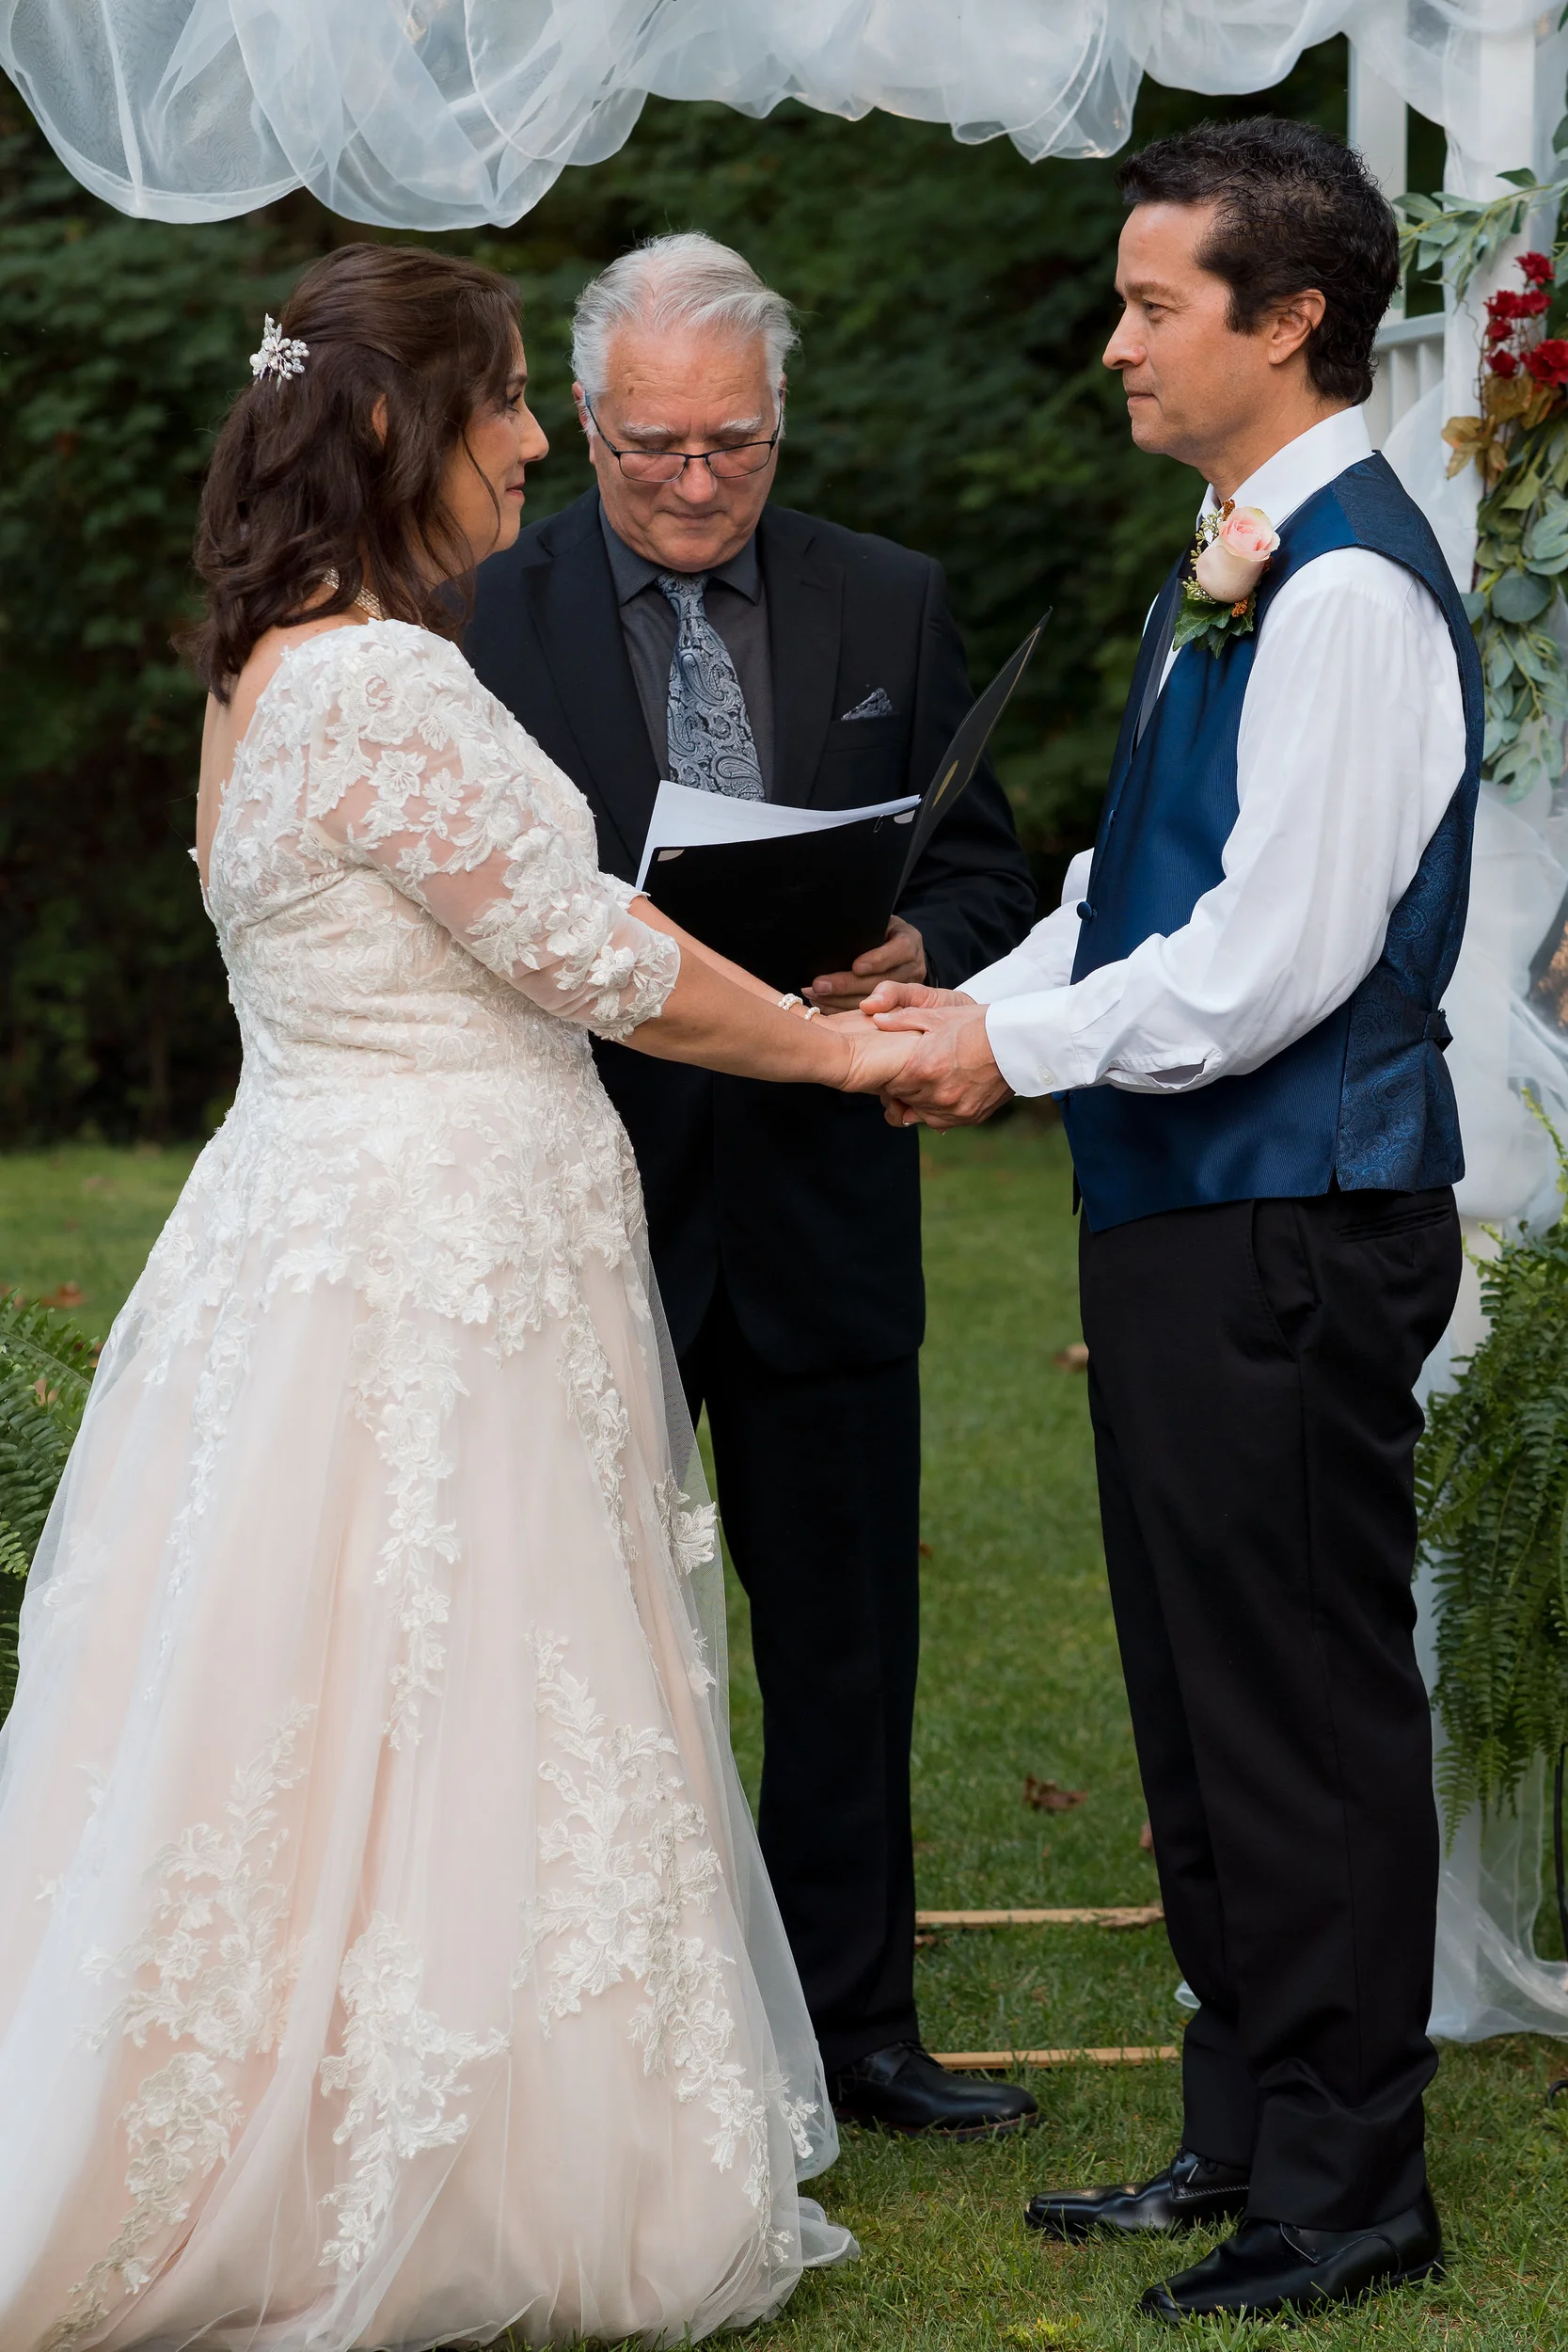 Wedding couple at ceremony